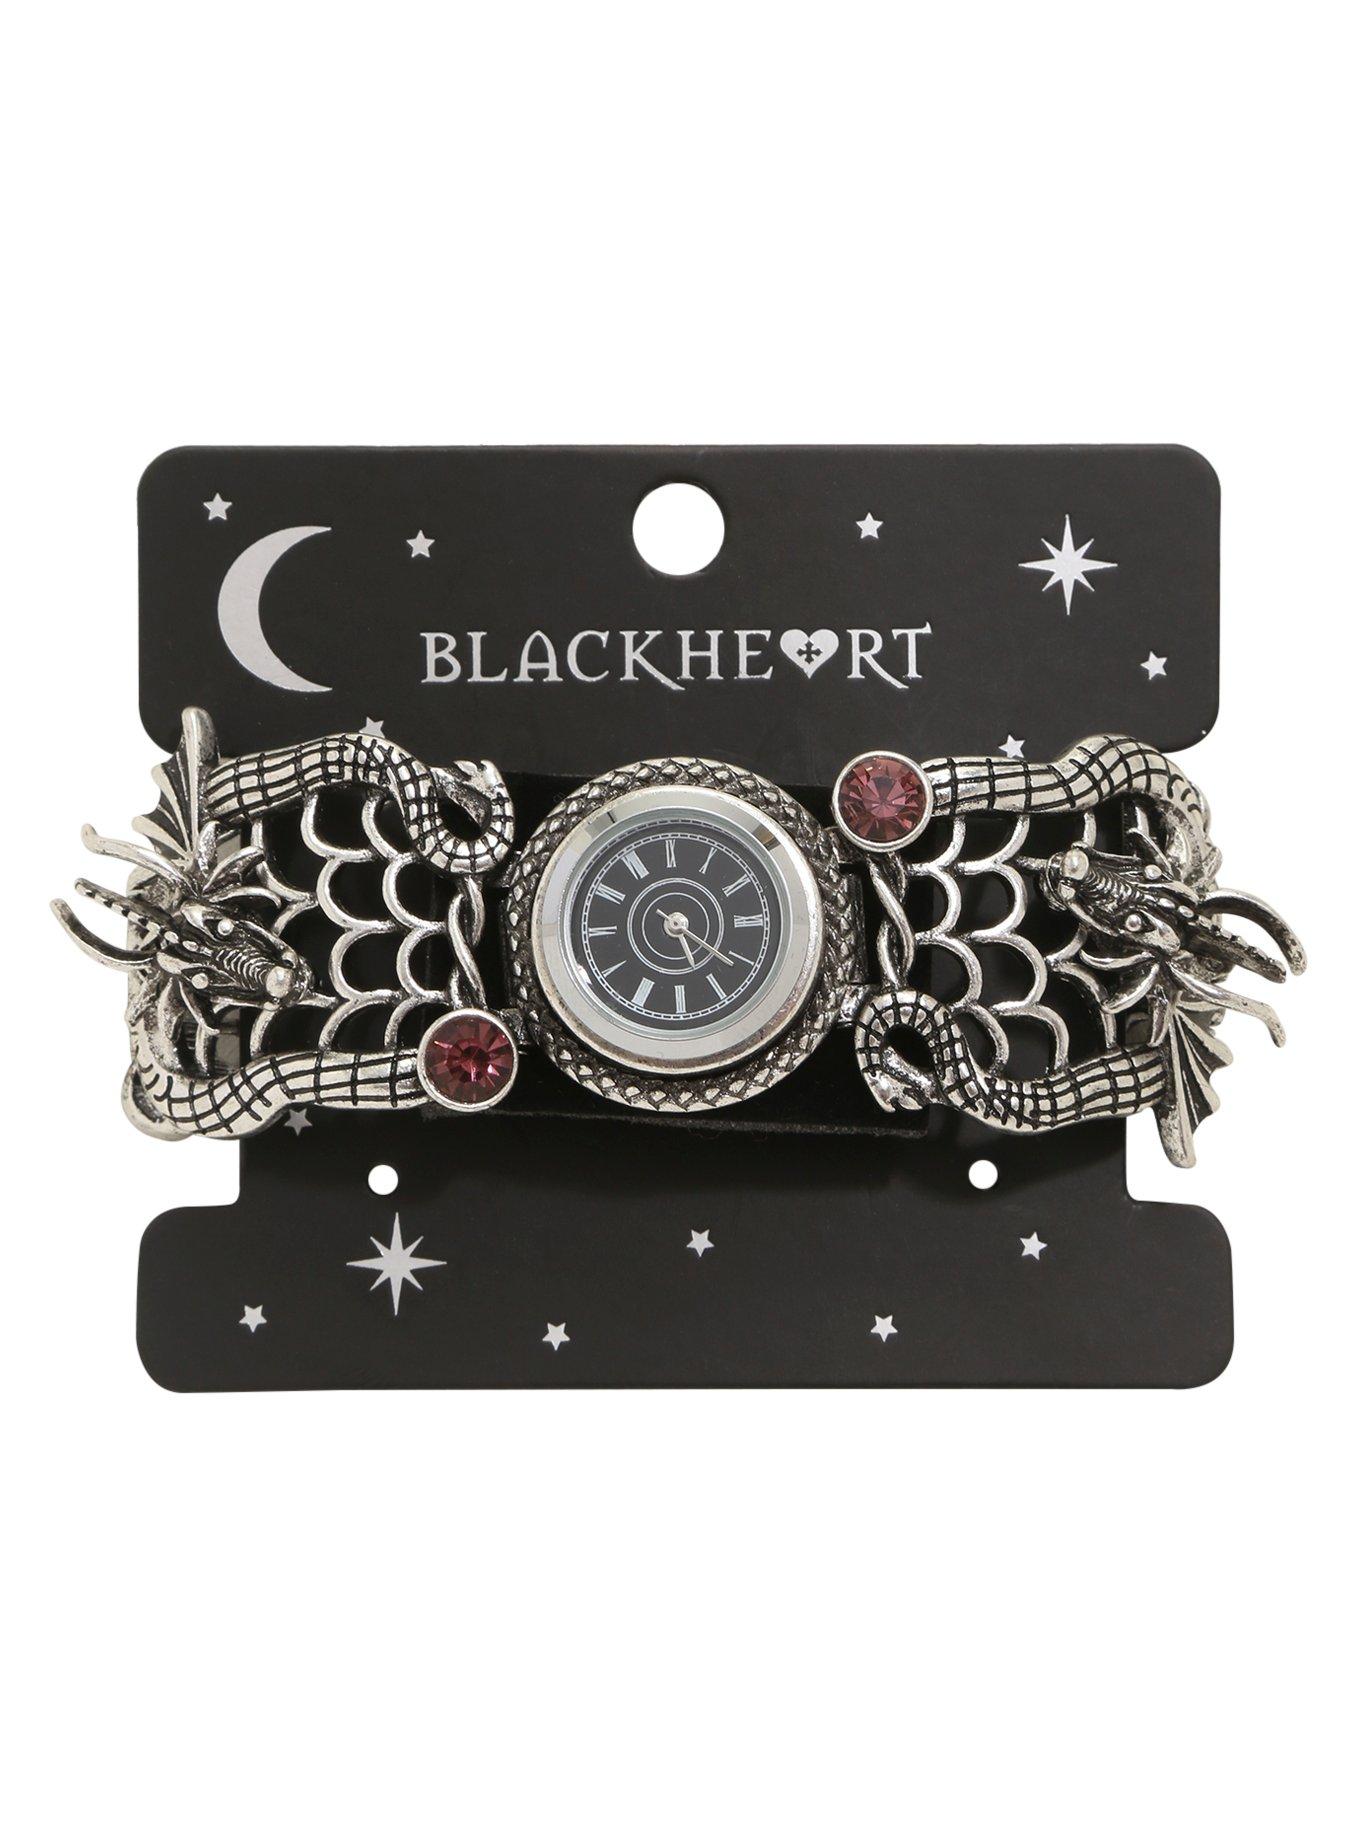 Blackheart Dragon Cuff Watch, , hi-res